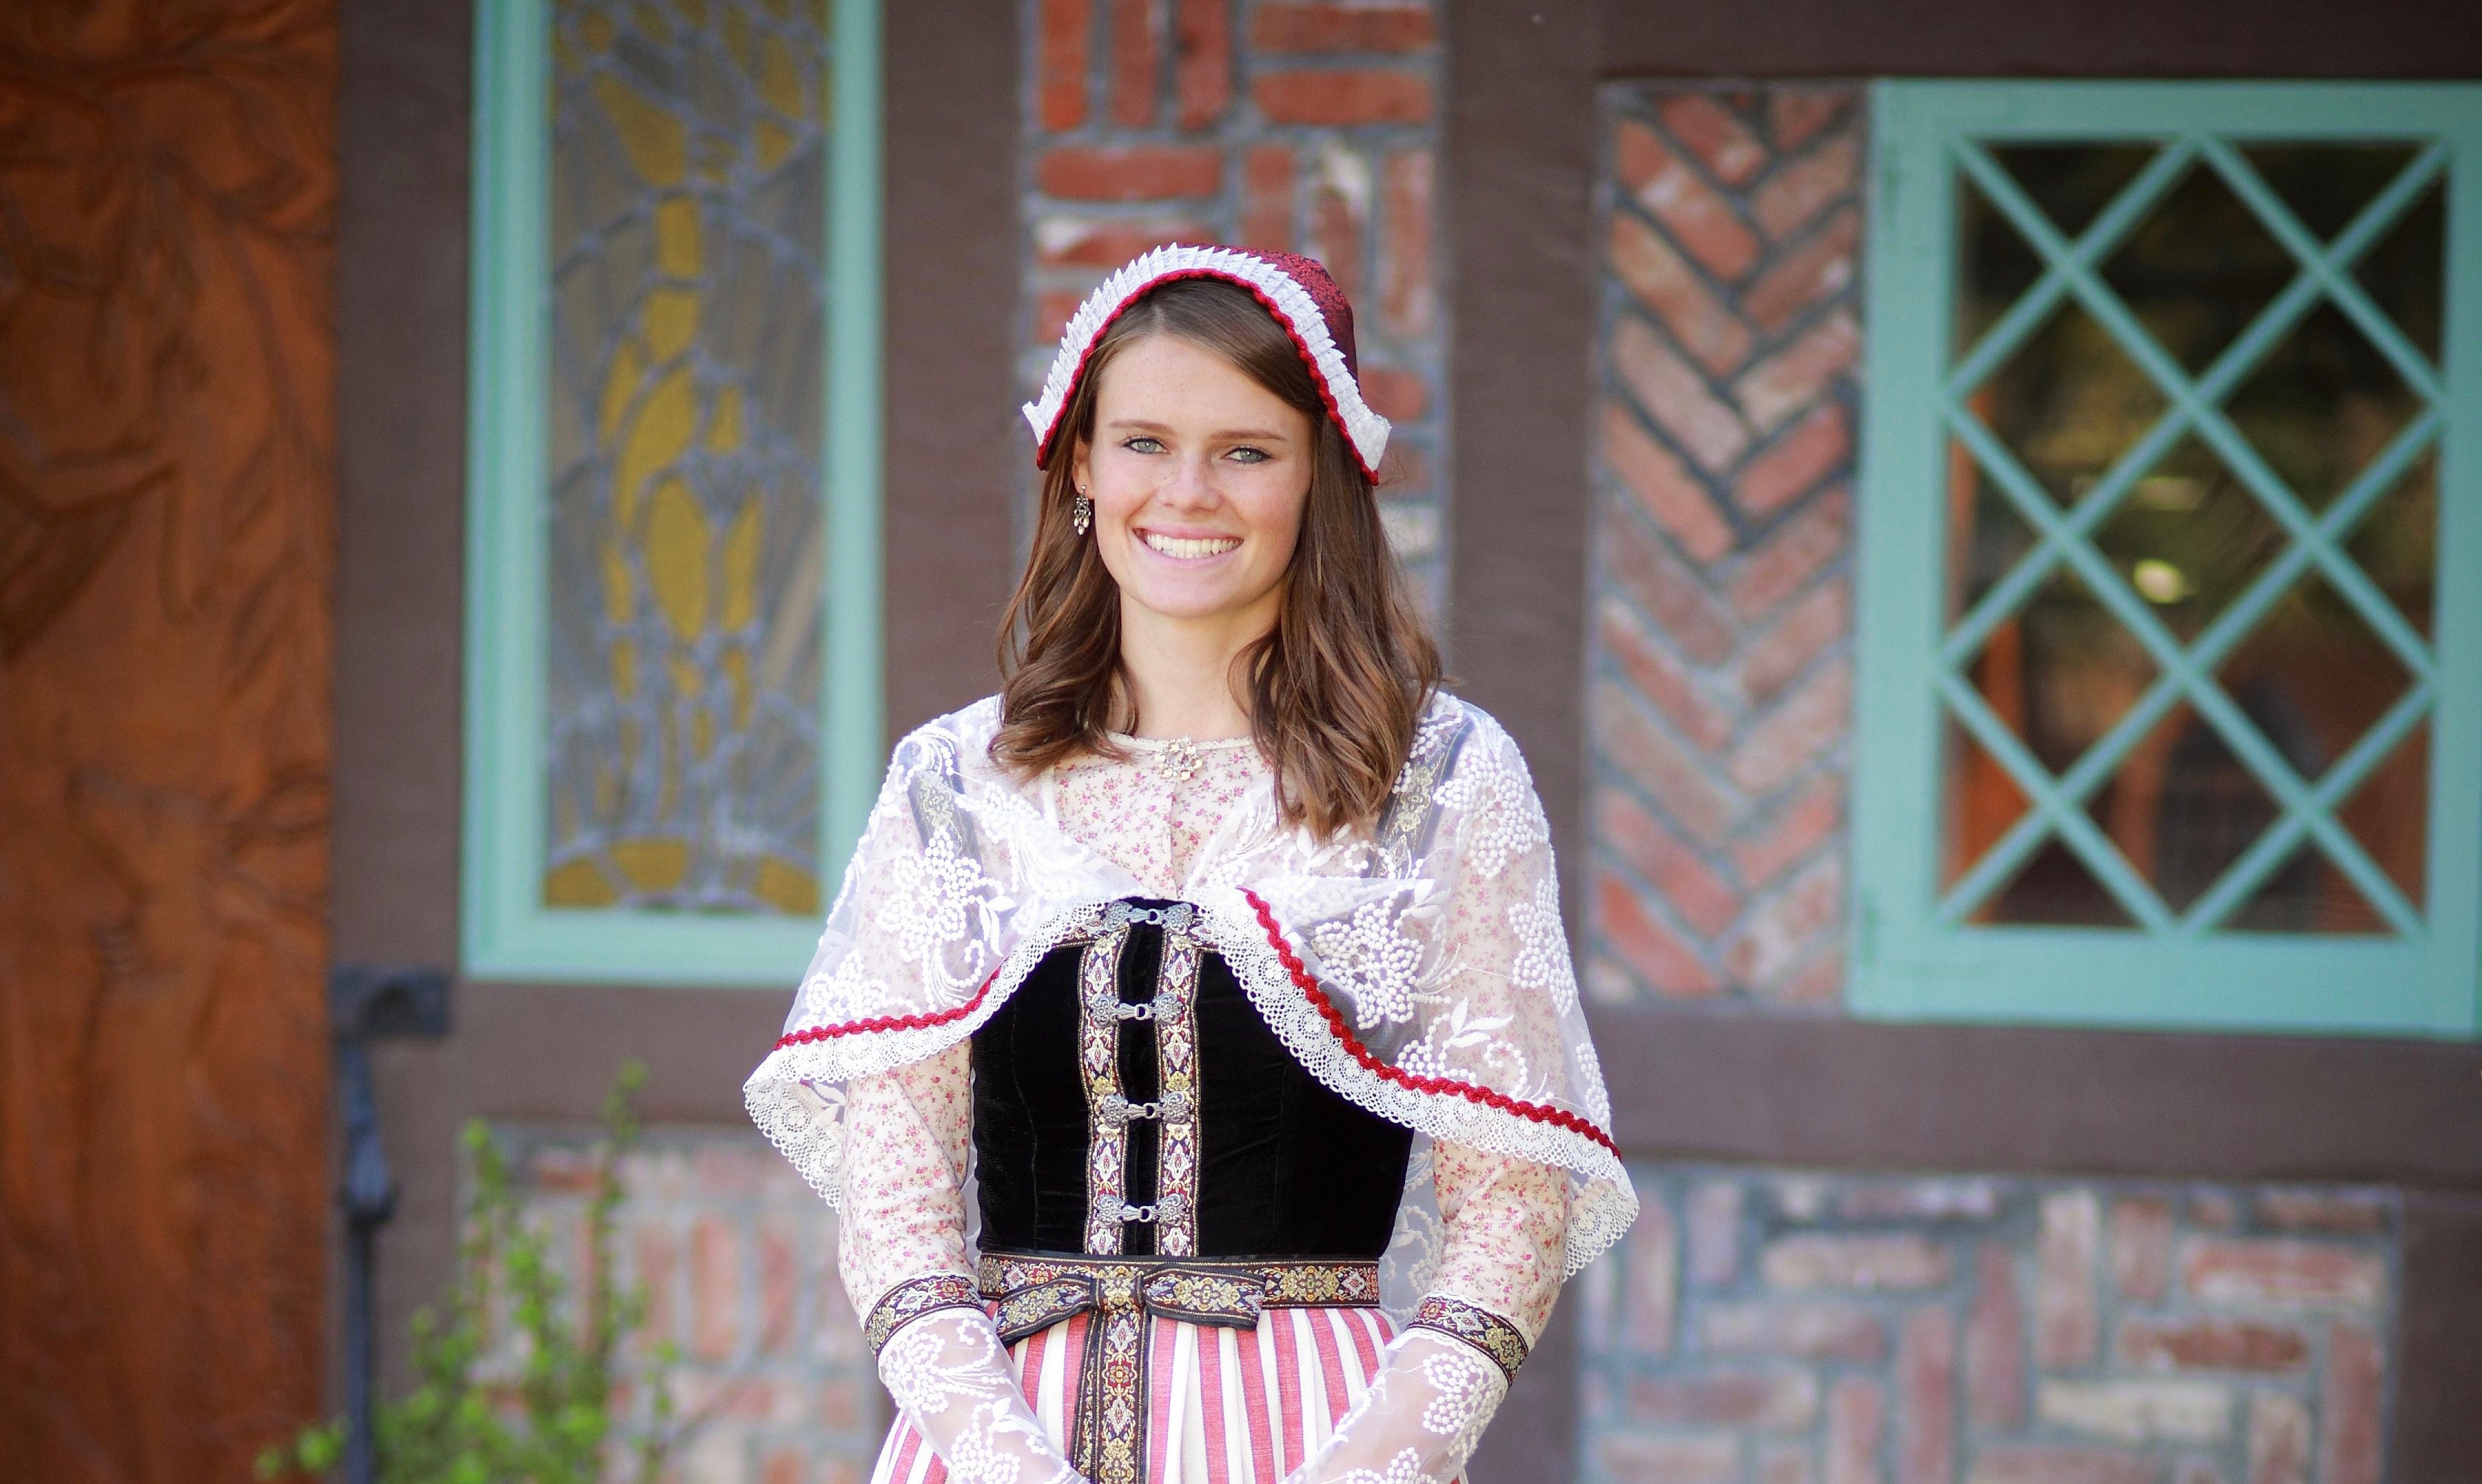 Gabrielle Heron named 2017 Danish Maid